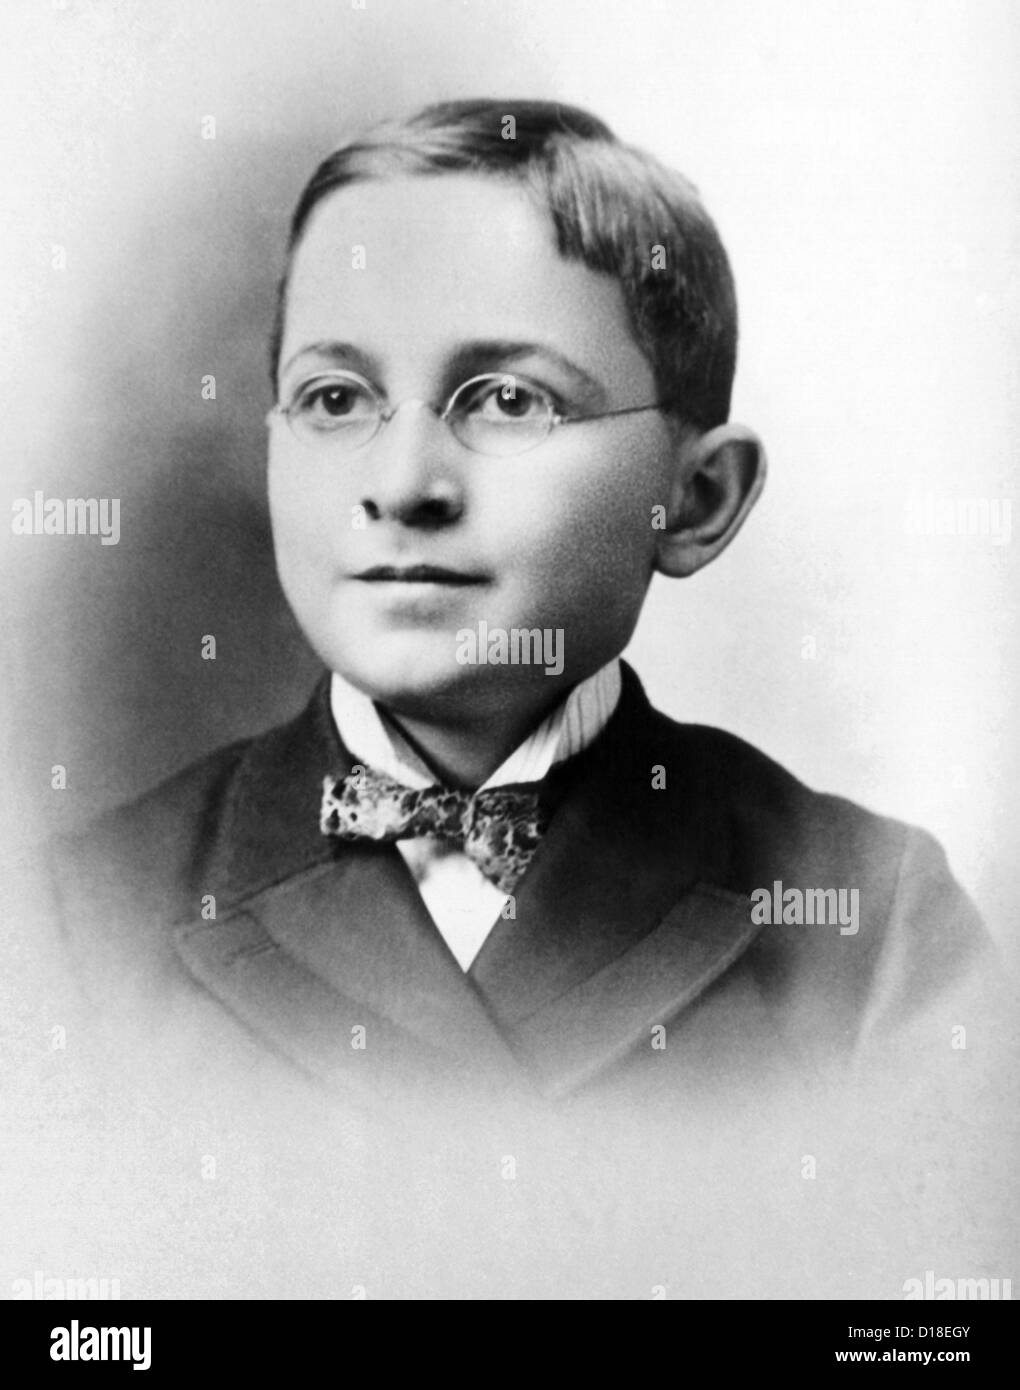 Harry Truman as a schoolboy. Ca. 1892. (CSU ALPHA 194) CSU Archives/Everett Collection Stock Photo